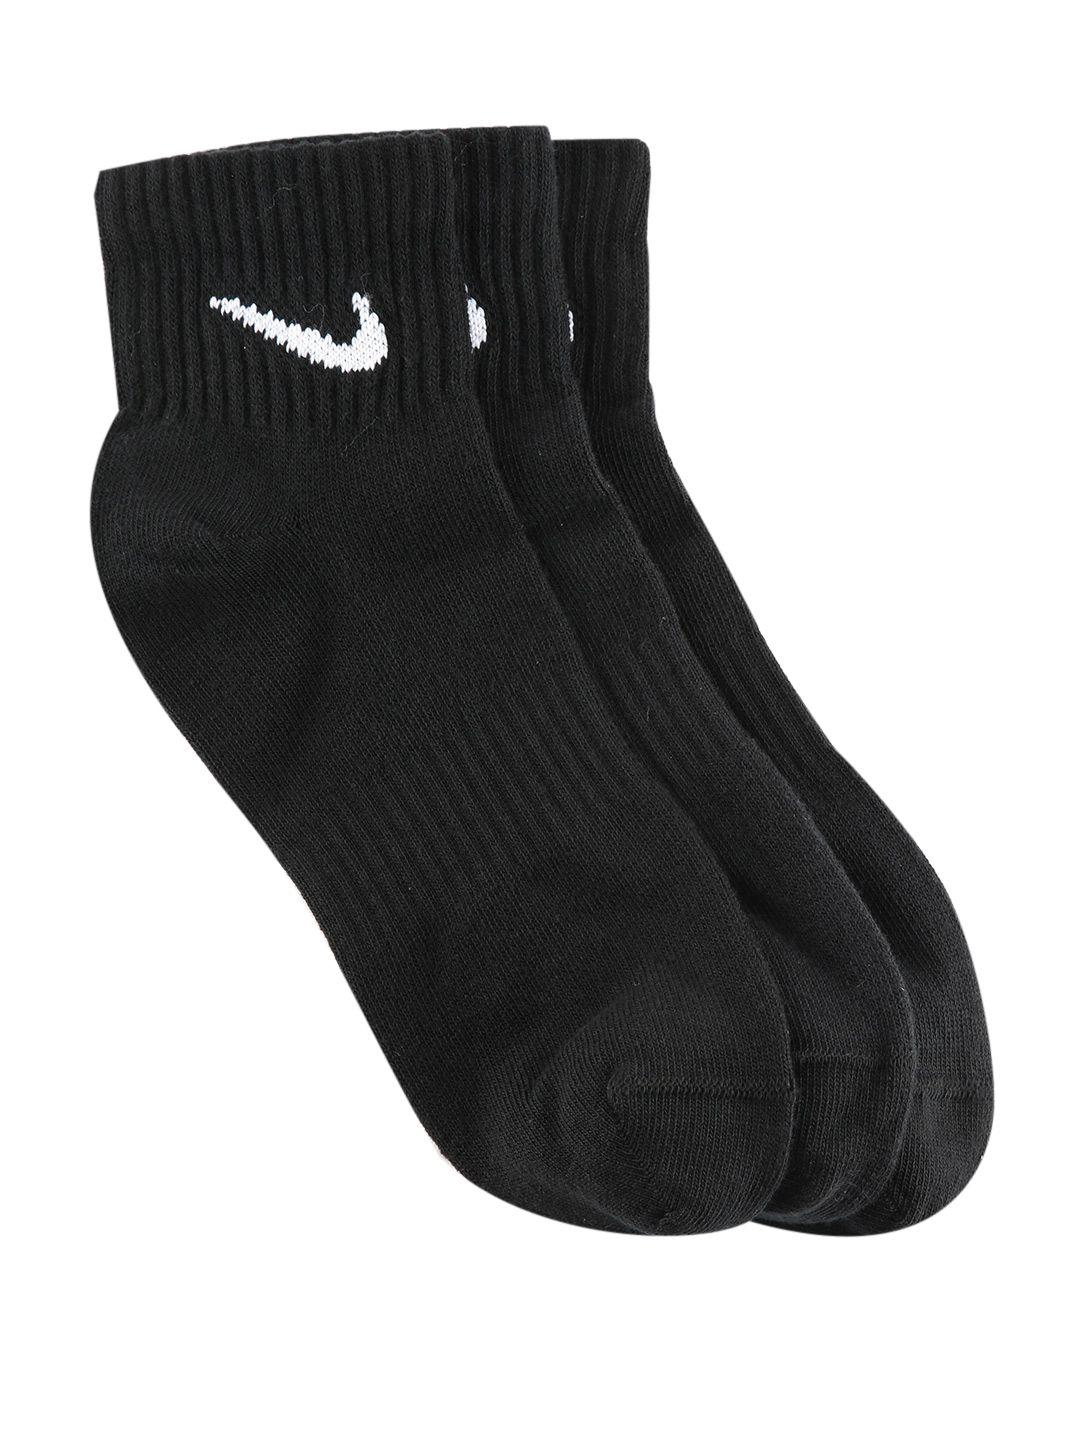 nike-unisex-pack-of-3-everyday-lightweight-ankle-length-socks